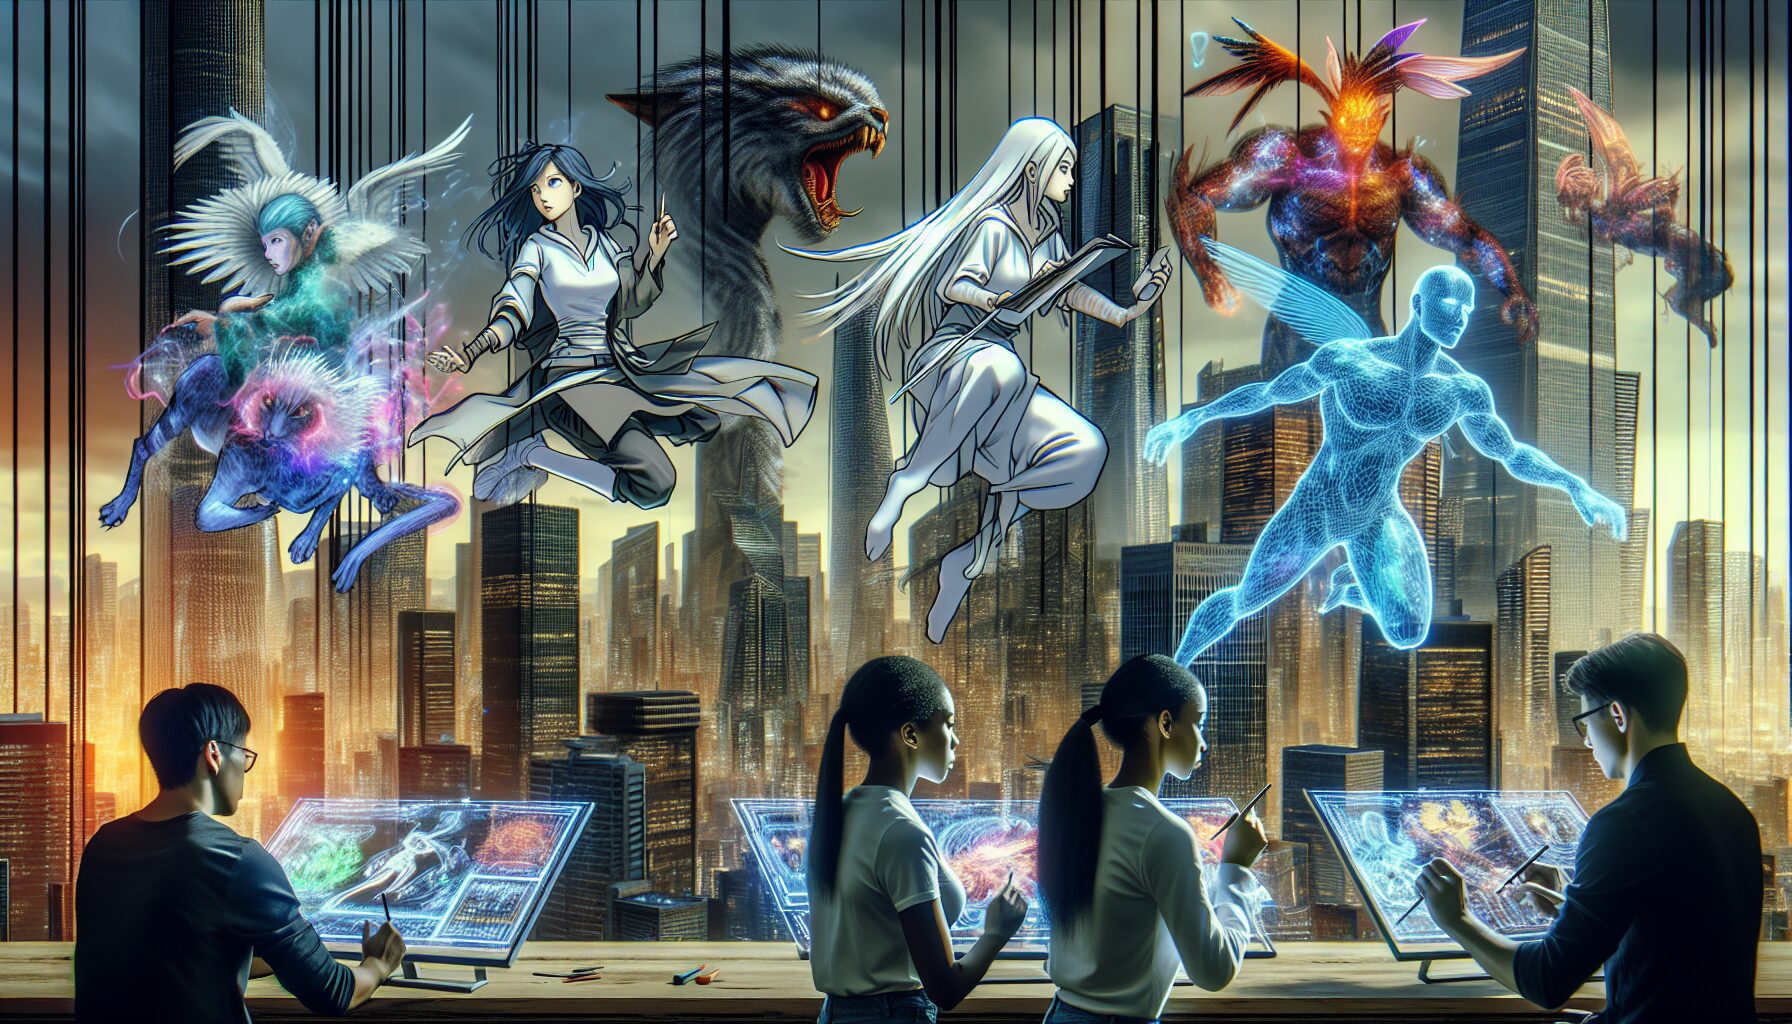 Revolutionary AI-powered manga creation